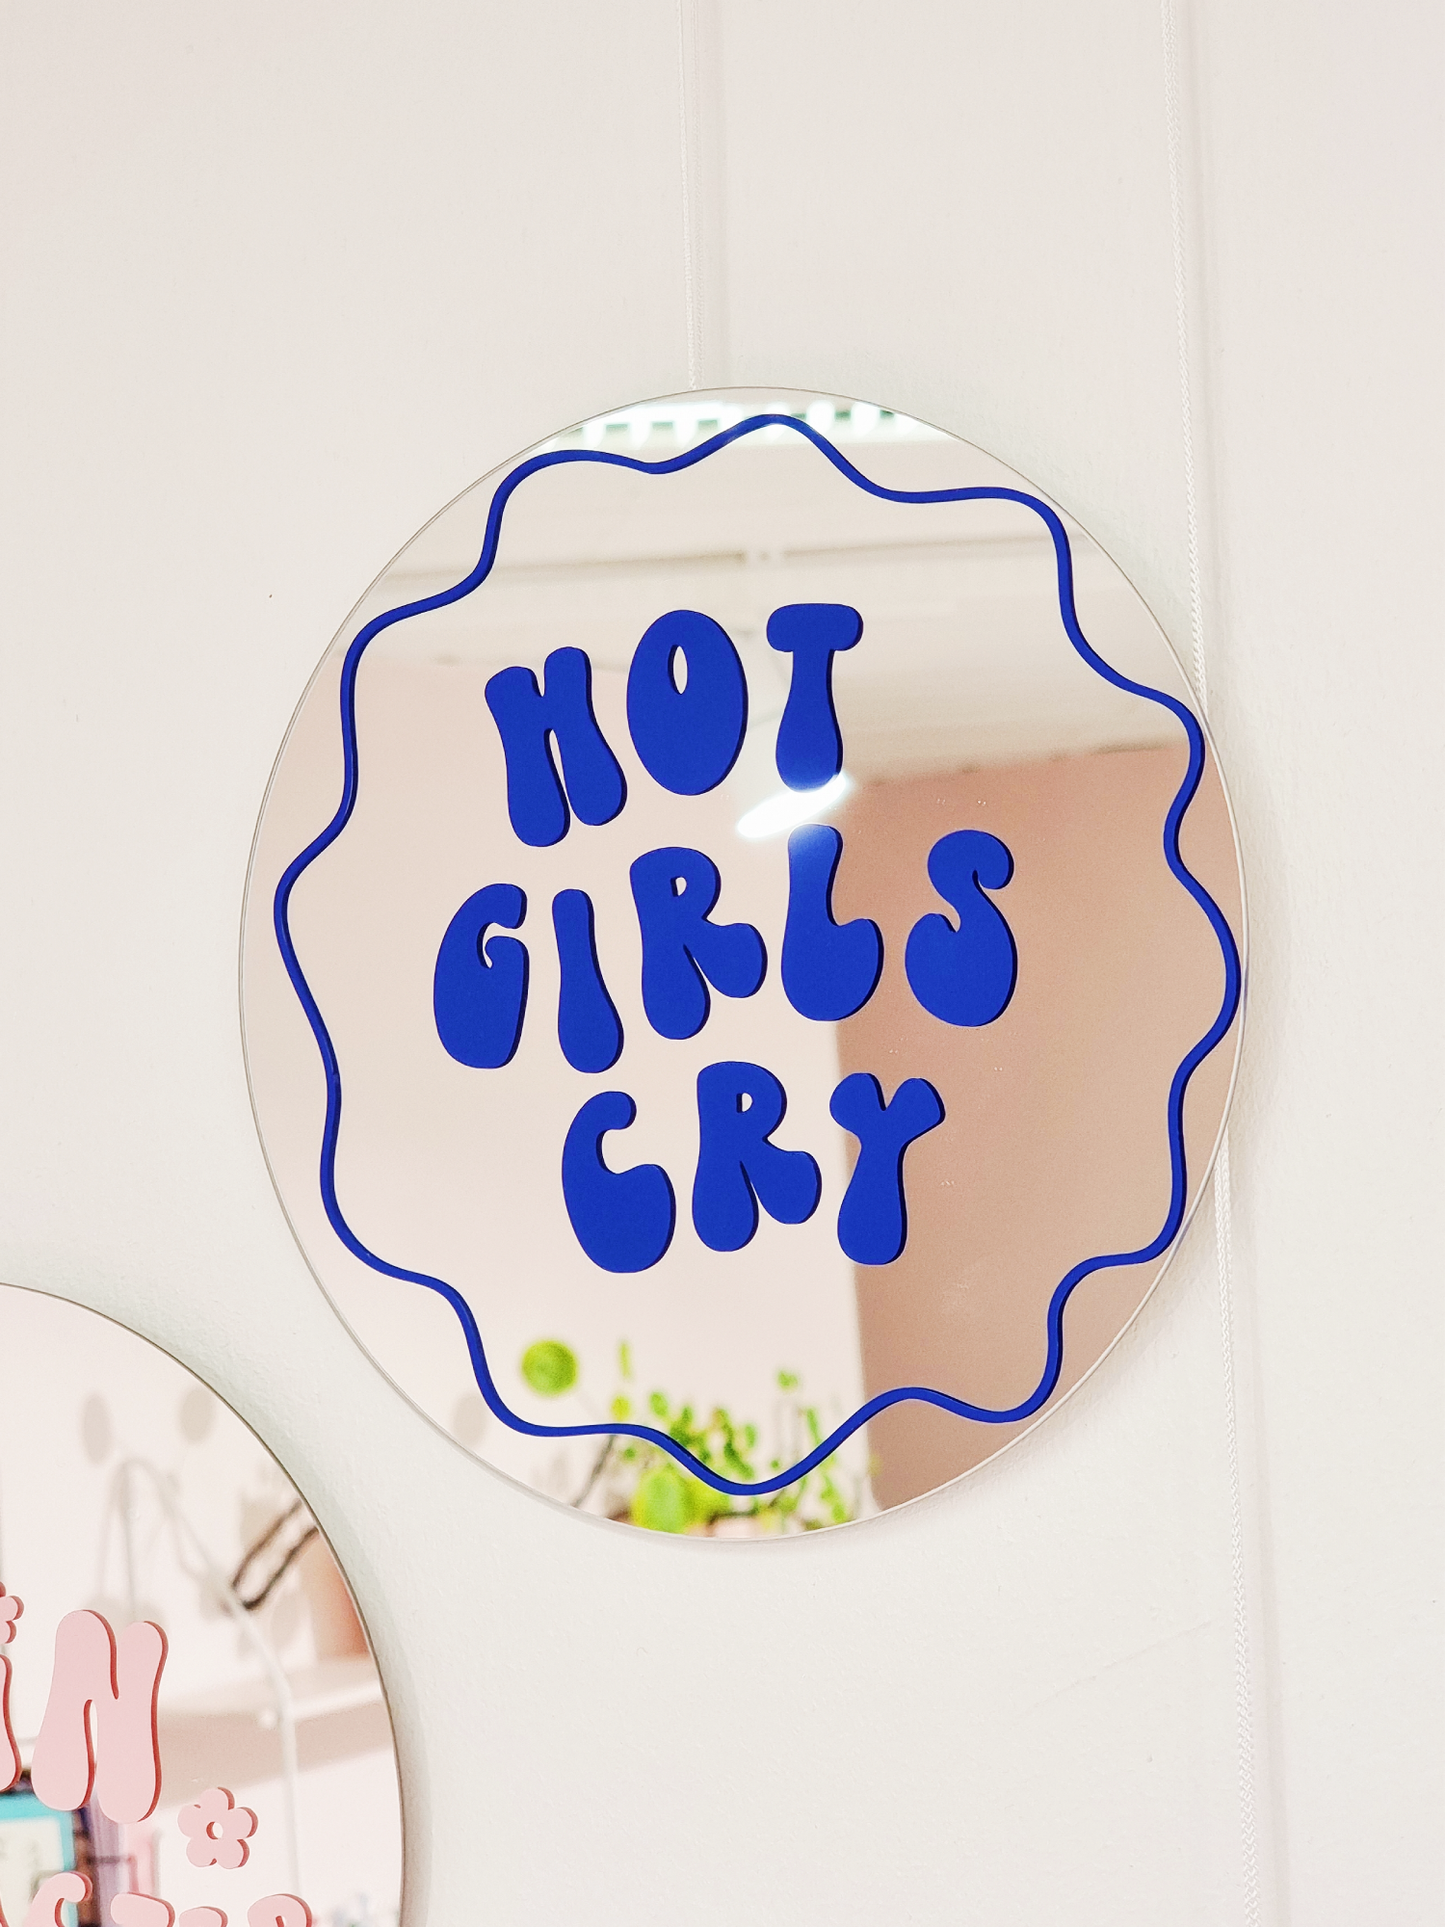 Hot Girls Cry Mirror